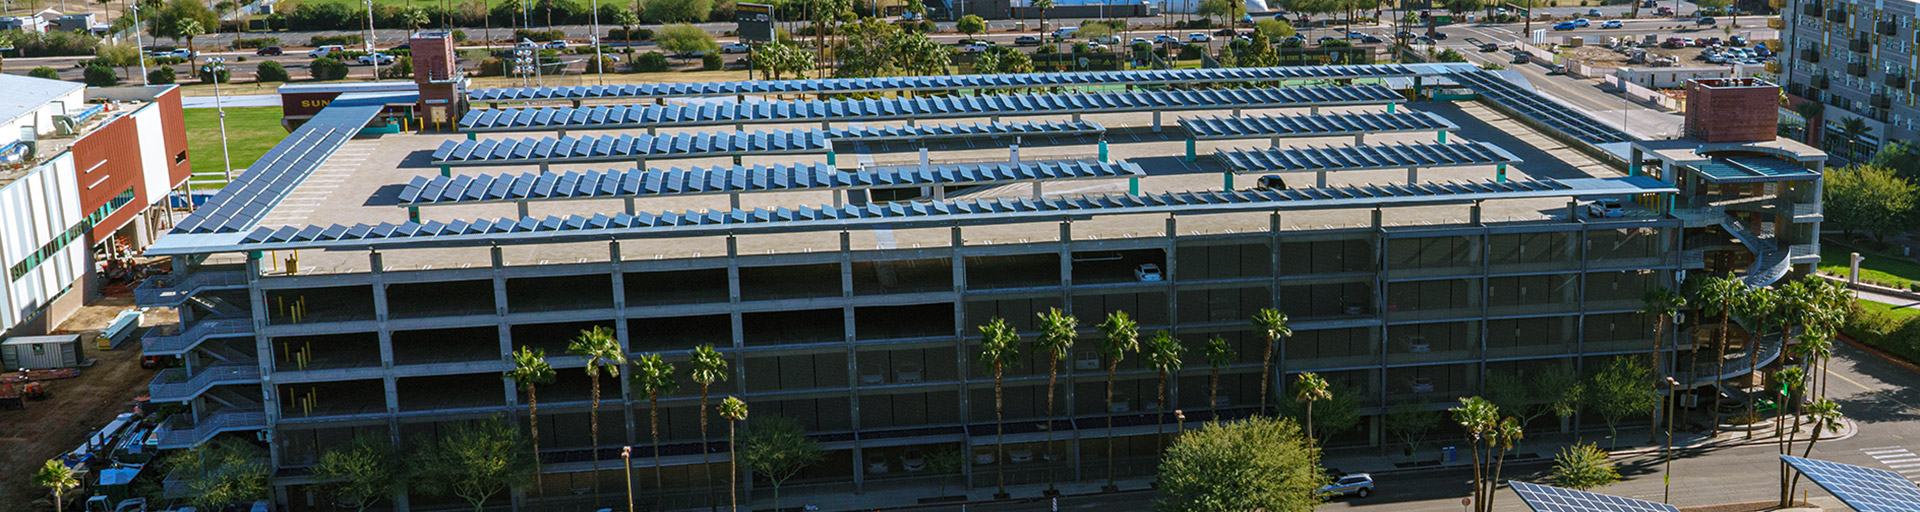 Parking Structure 7 - Packard - solar